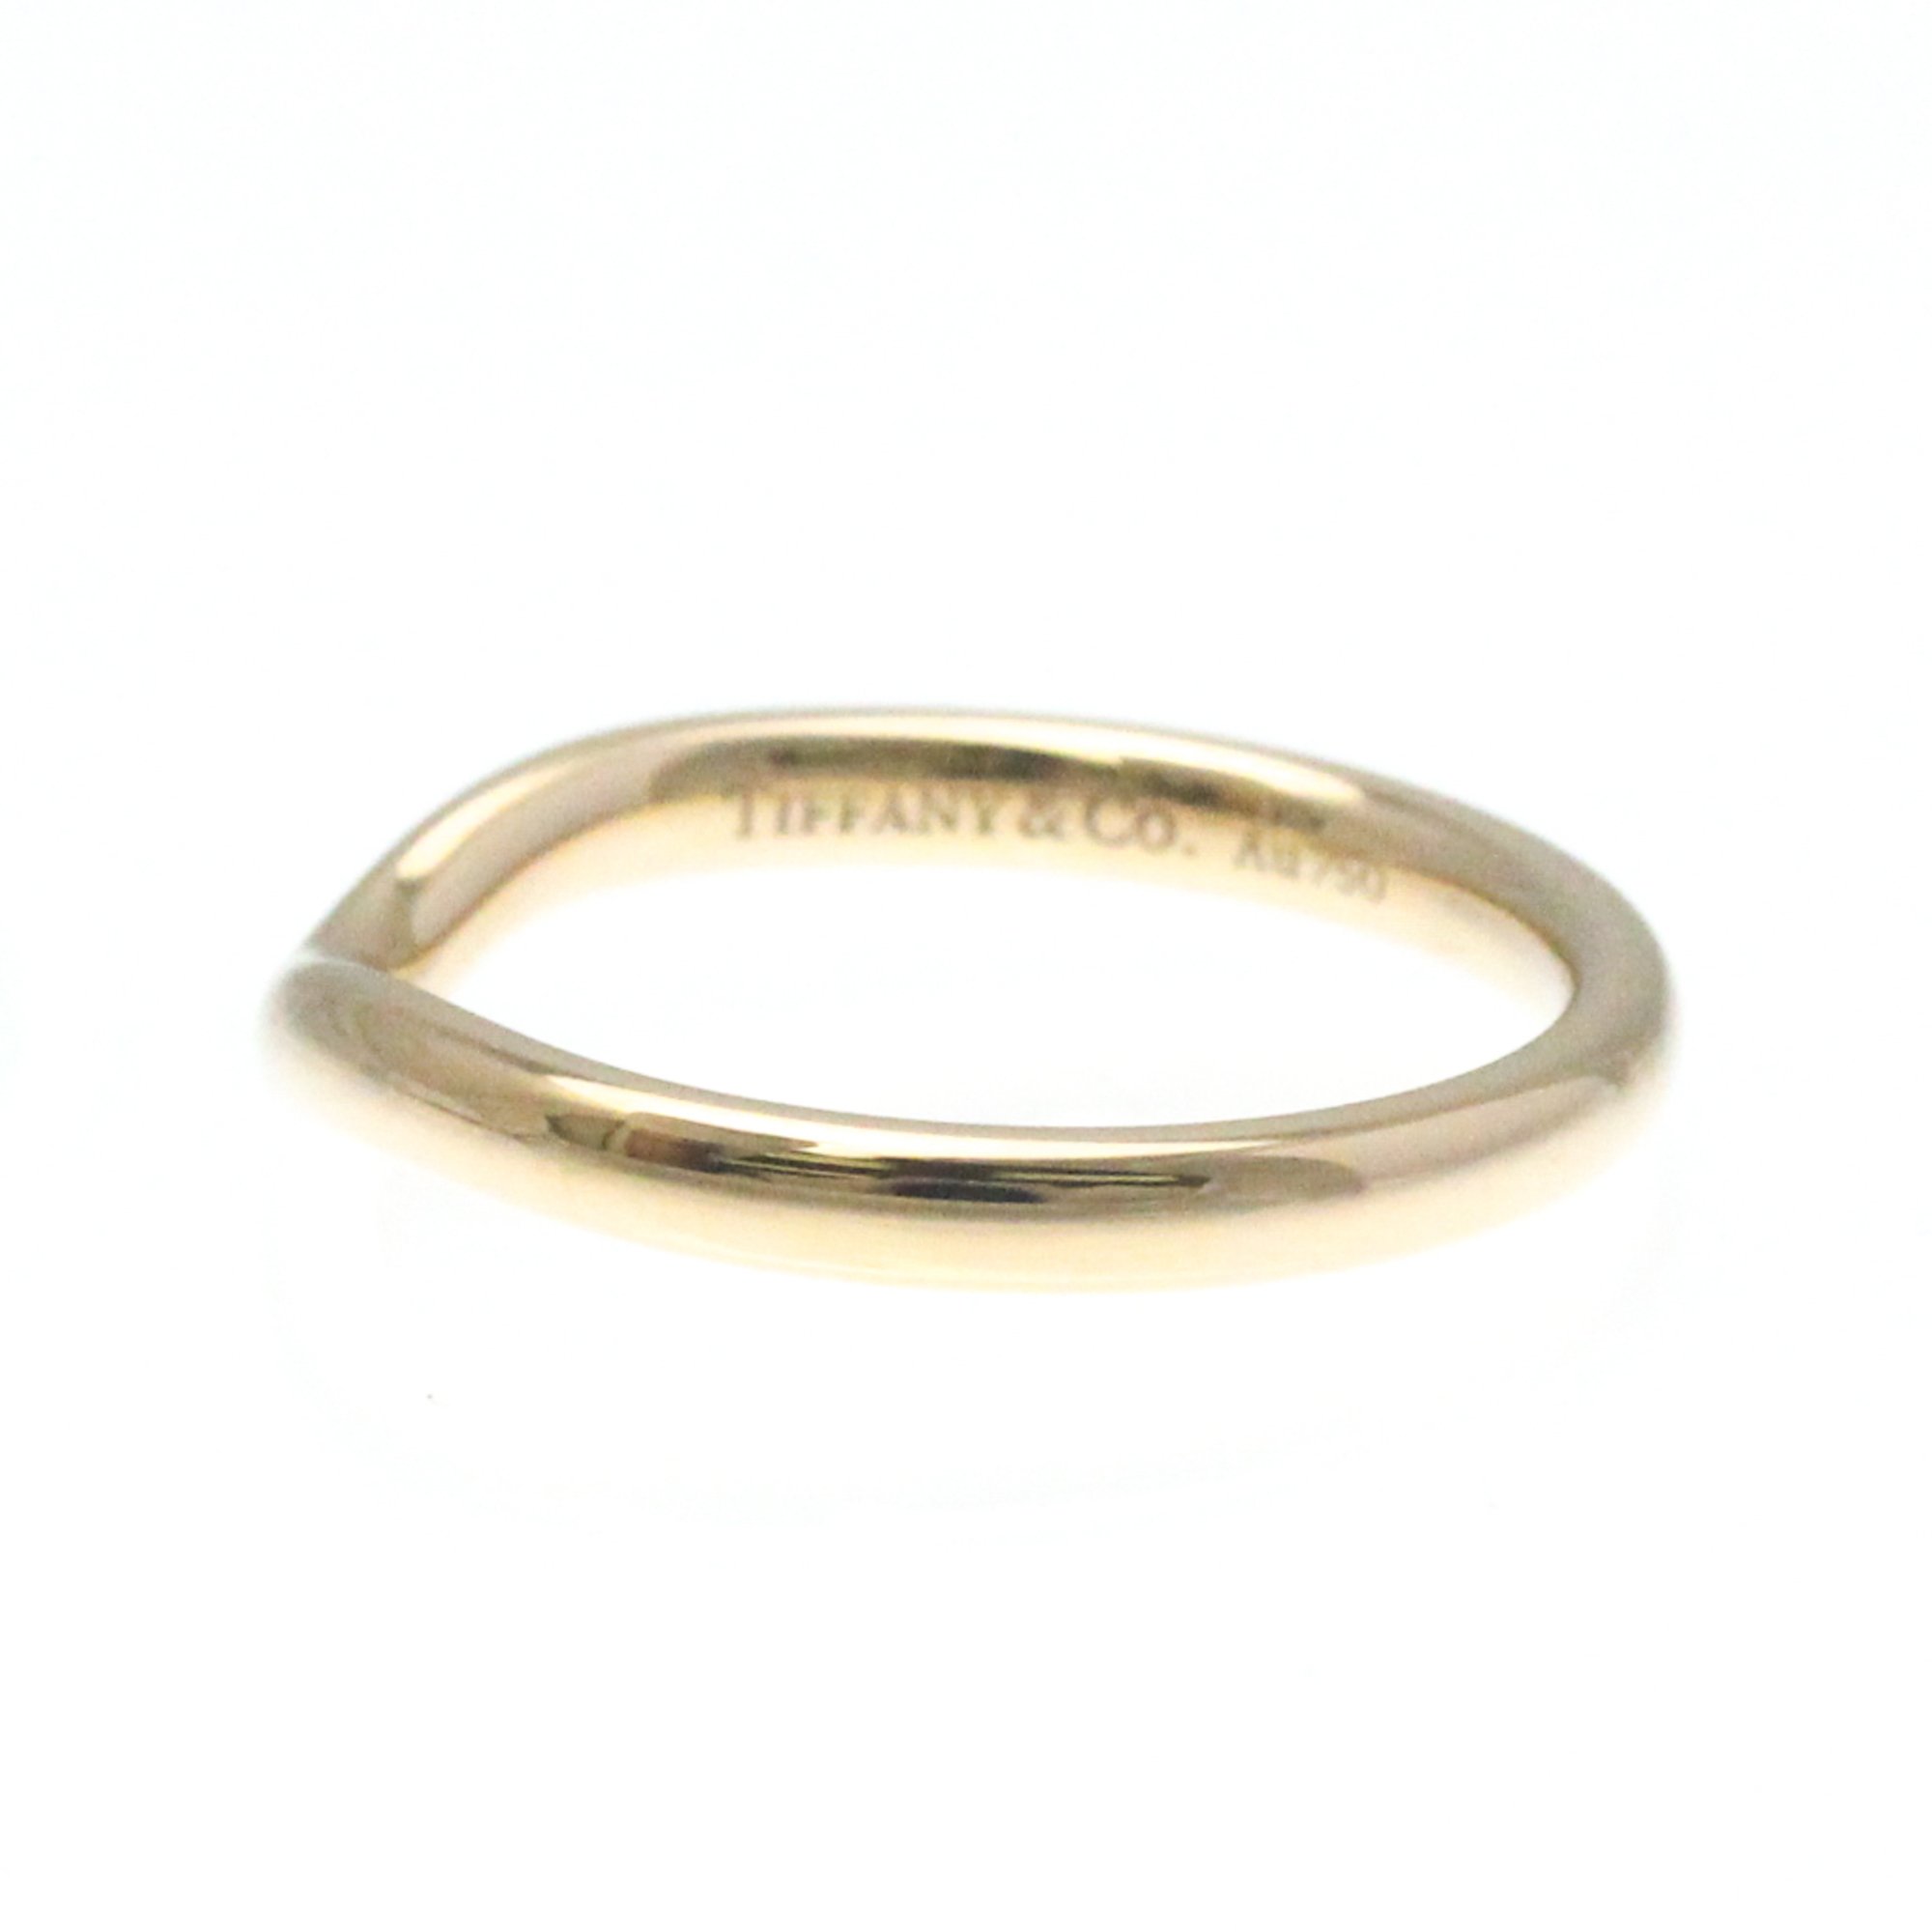 Tiffany Curved Band Ring Pink Gold (18K) Fashion No Stone Band Ring Pink Gold